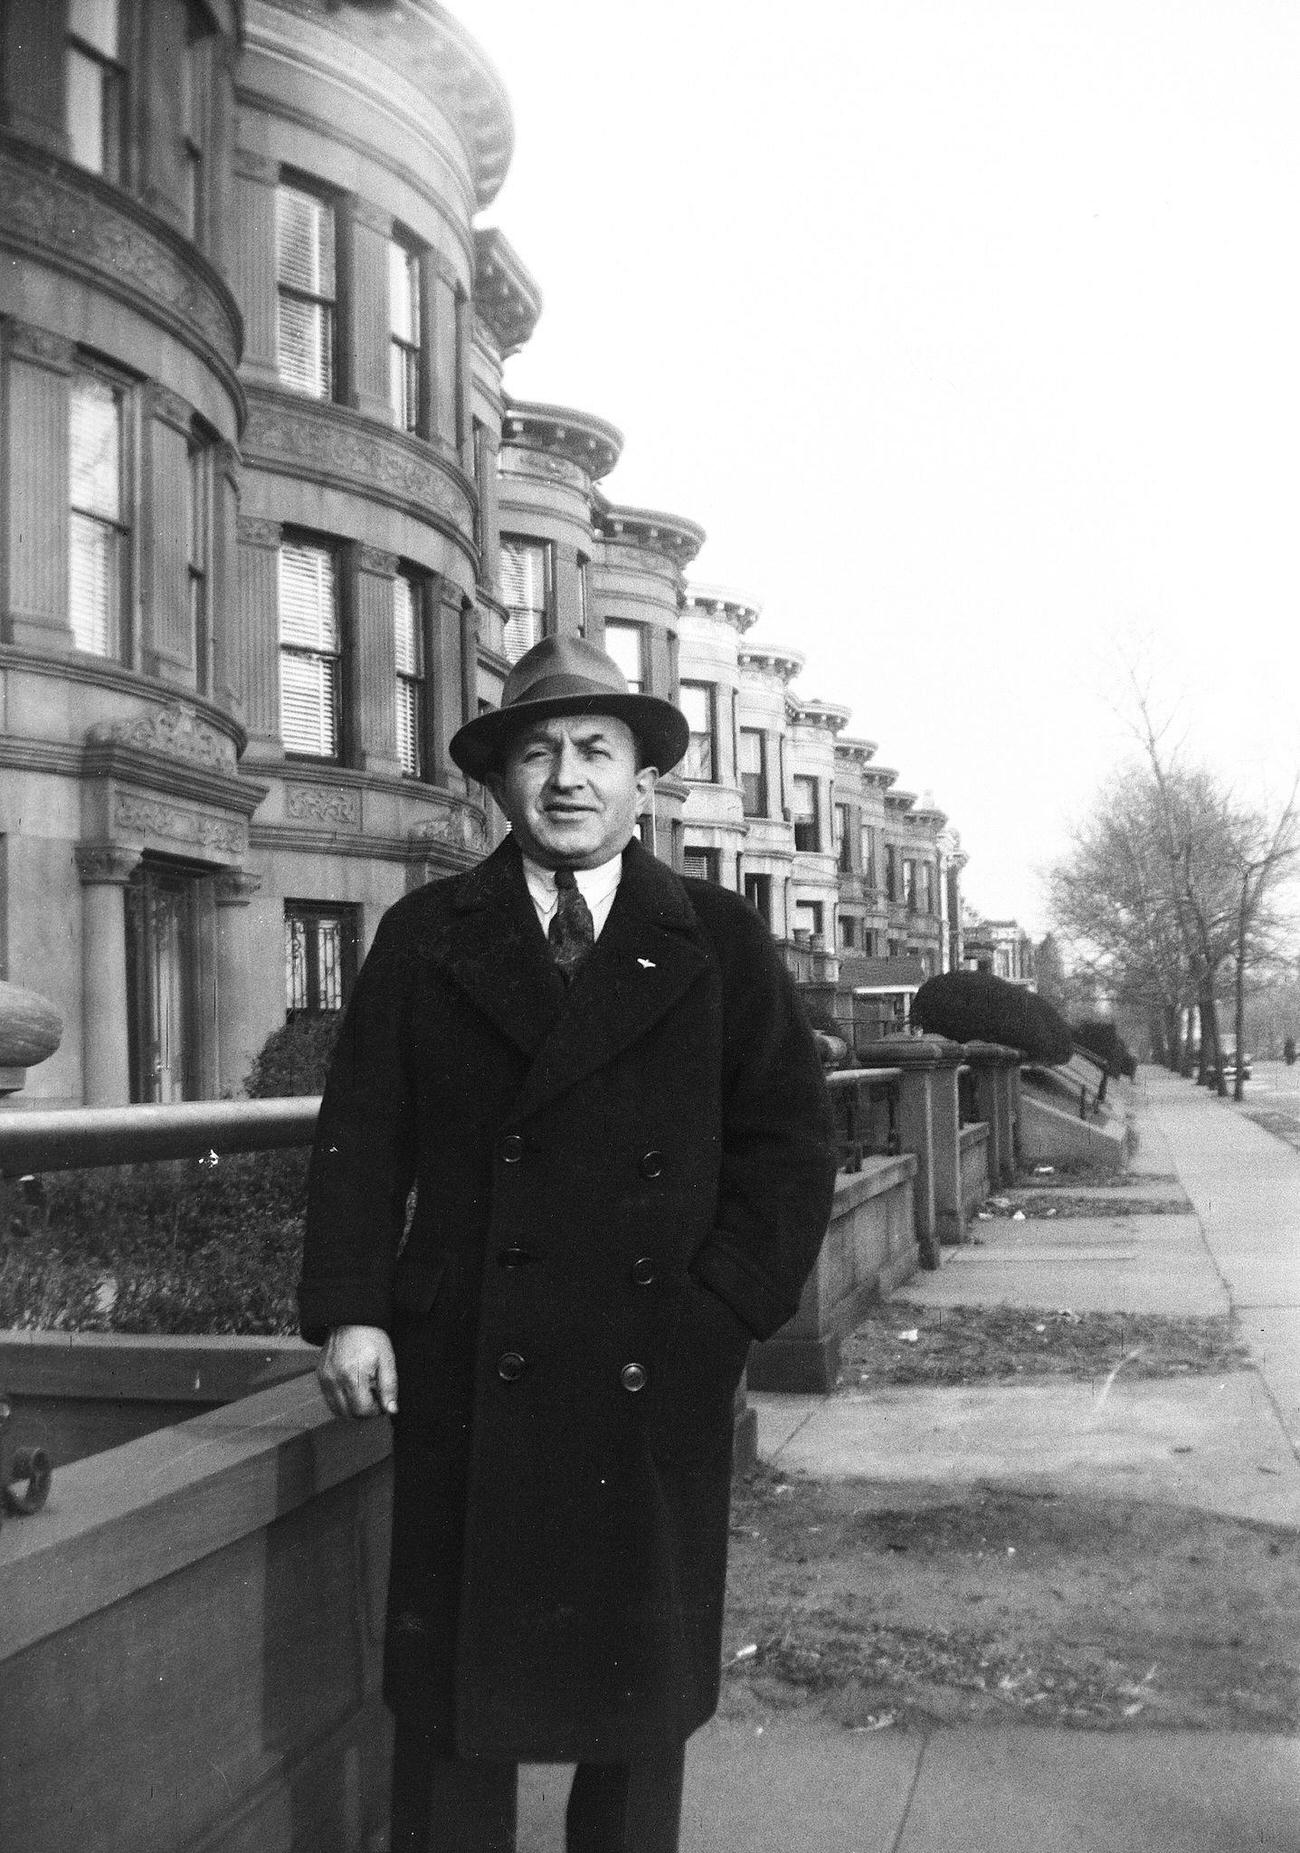 Portrait Of Adolf Schlussel Wearing Winter Coat And Hat On Brooklyn Street, 1944